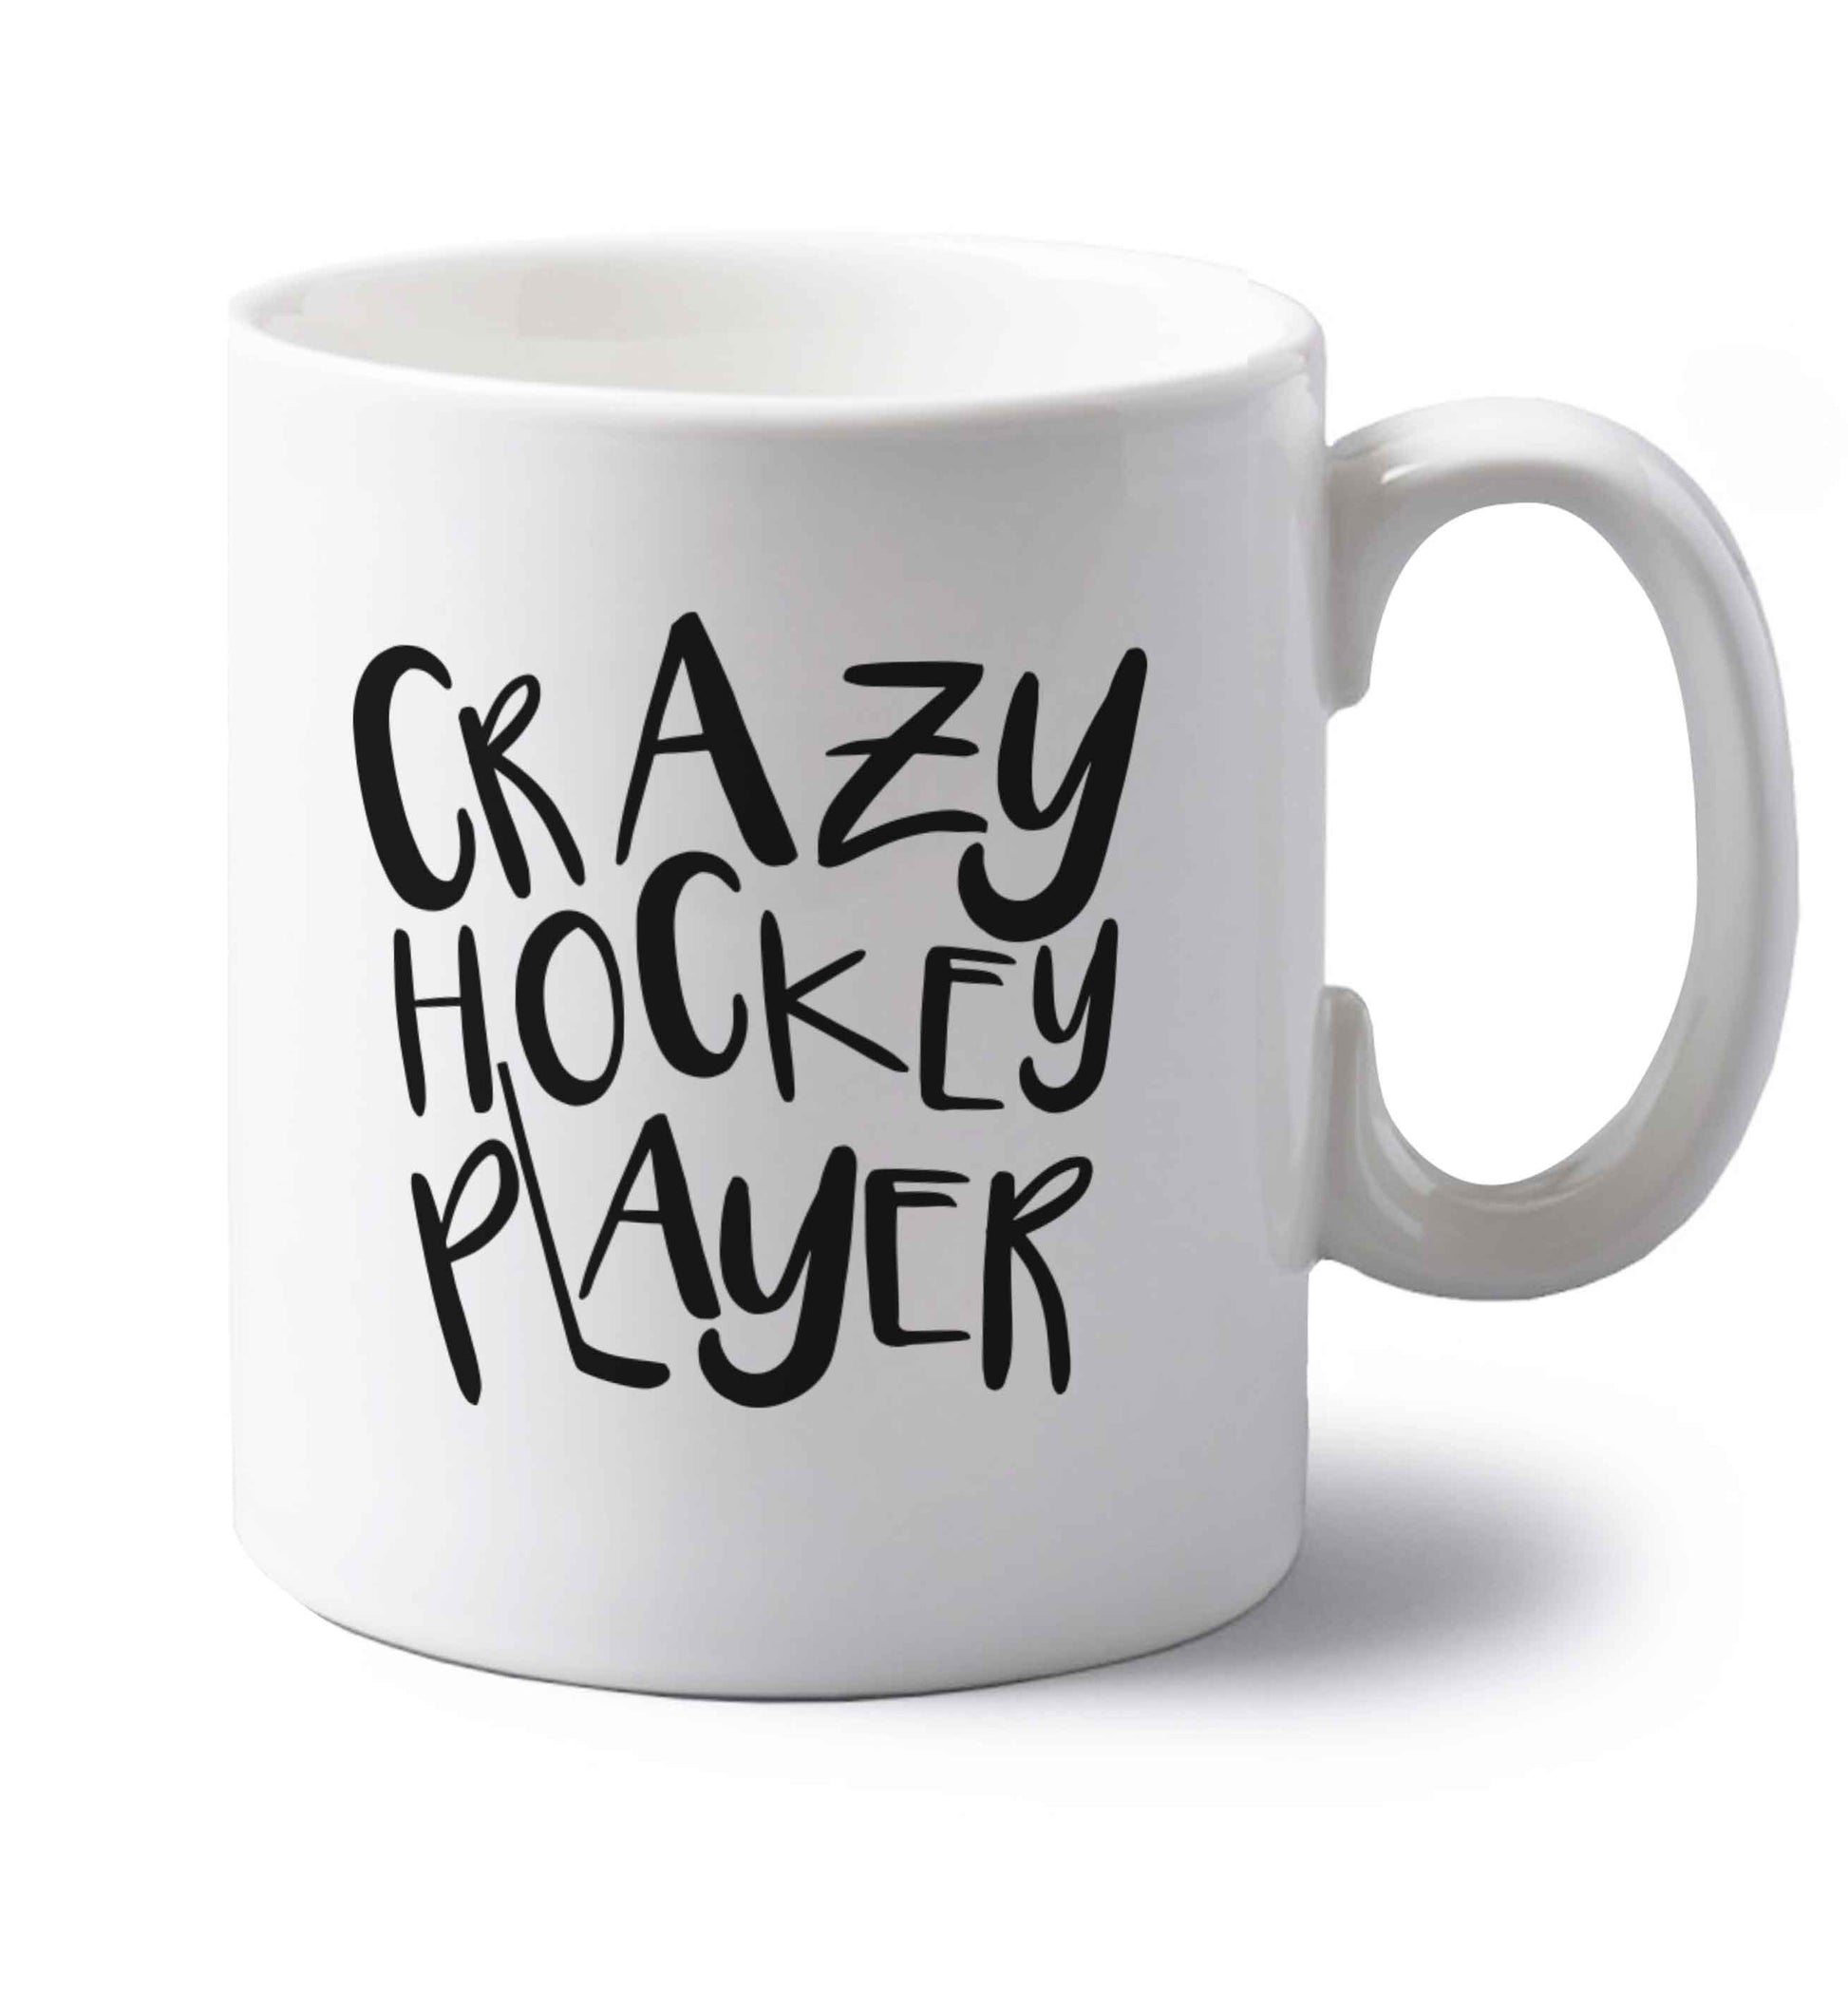 Crazy hockey player left handed white ceramic mug 